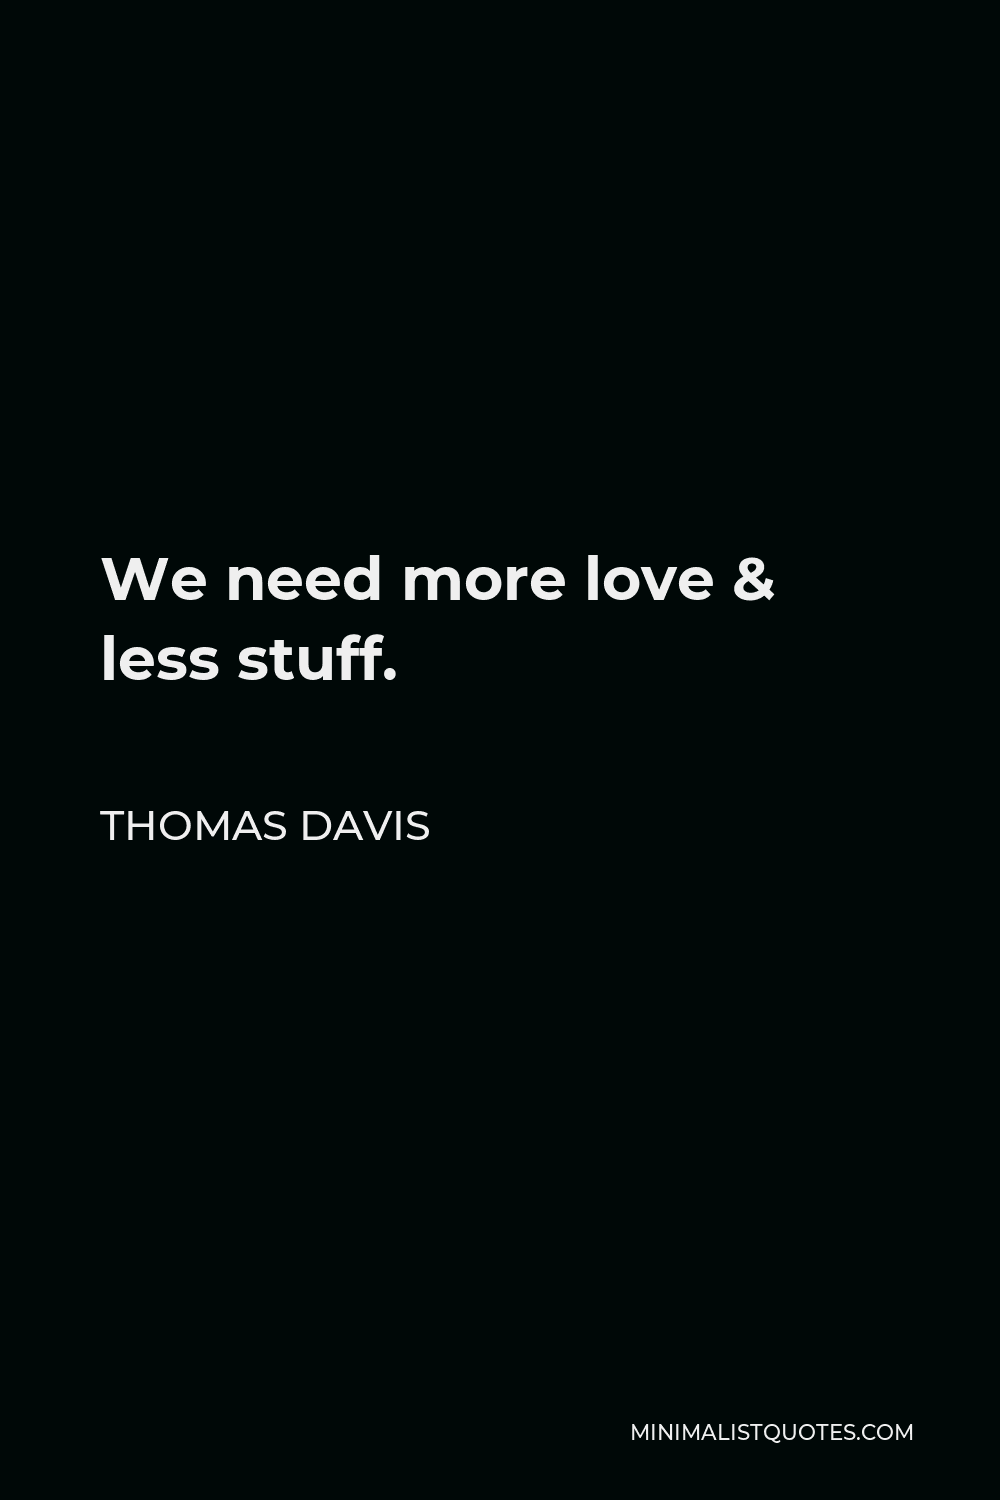 Thomas Davis Quote - We need more love & less stuff.